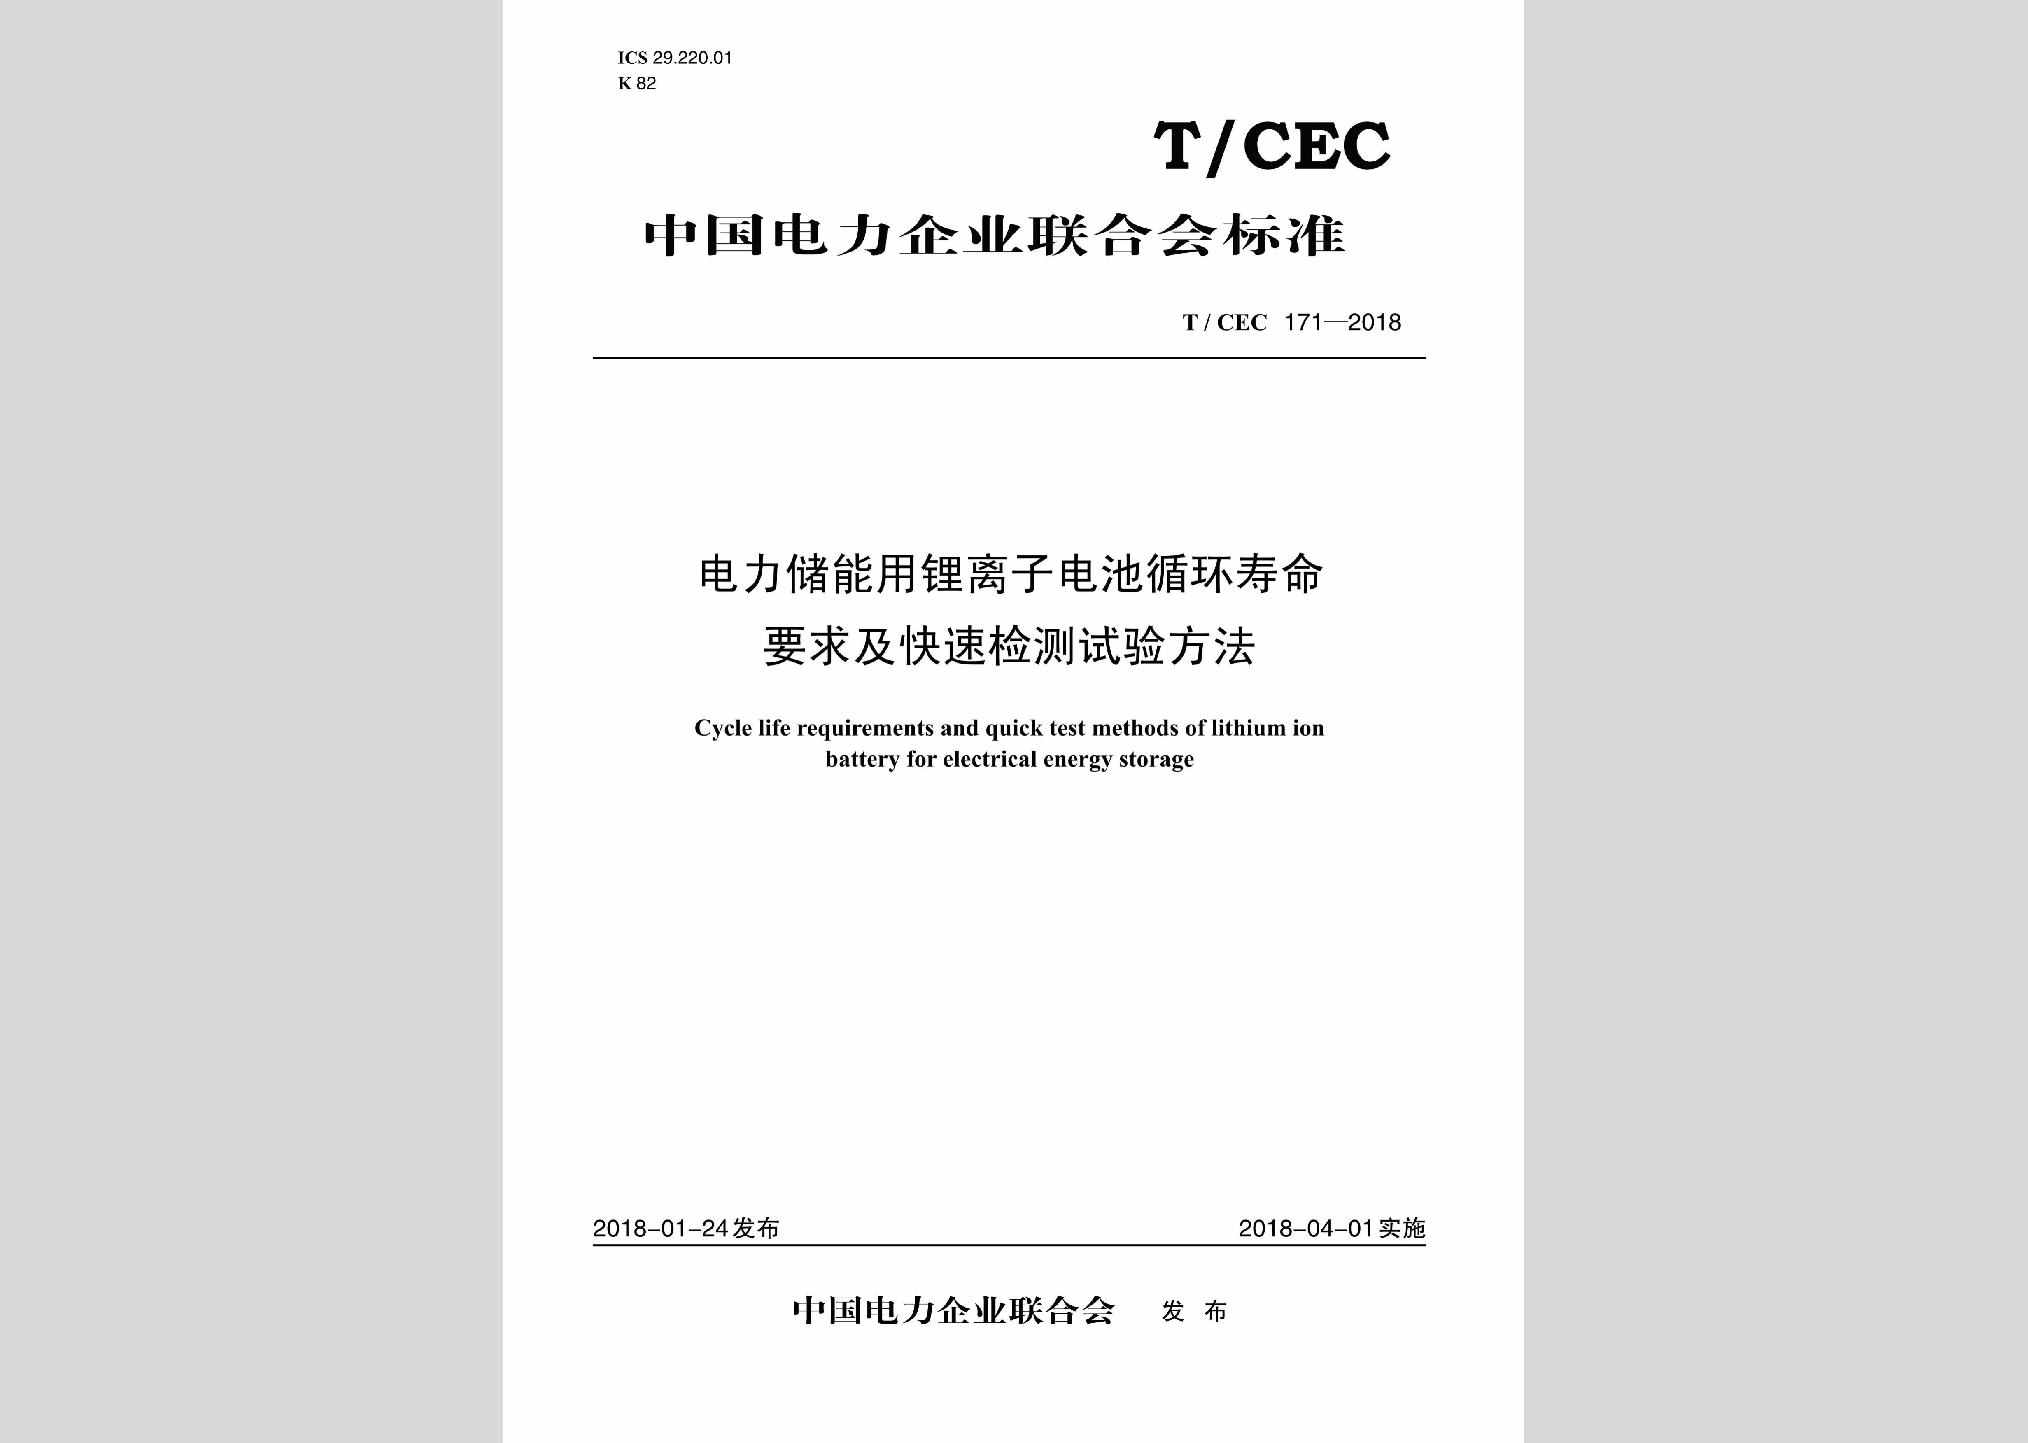 T/CEC171-2018：电力储能用锂离子电池循环寿命要求及快速检测试验方法